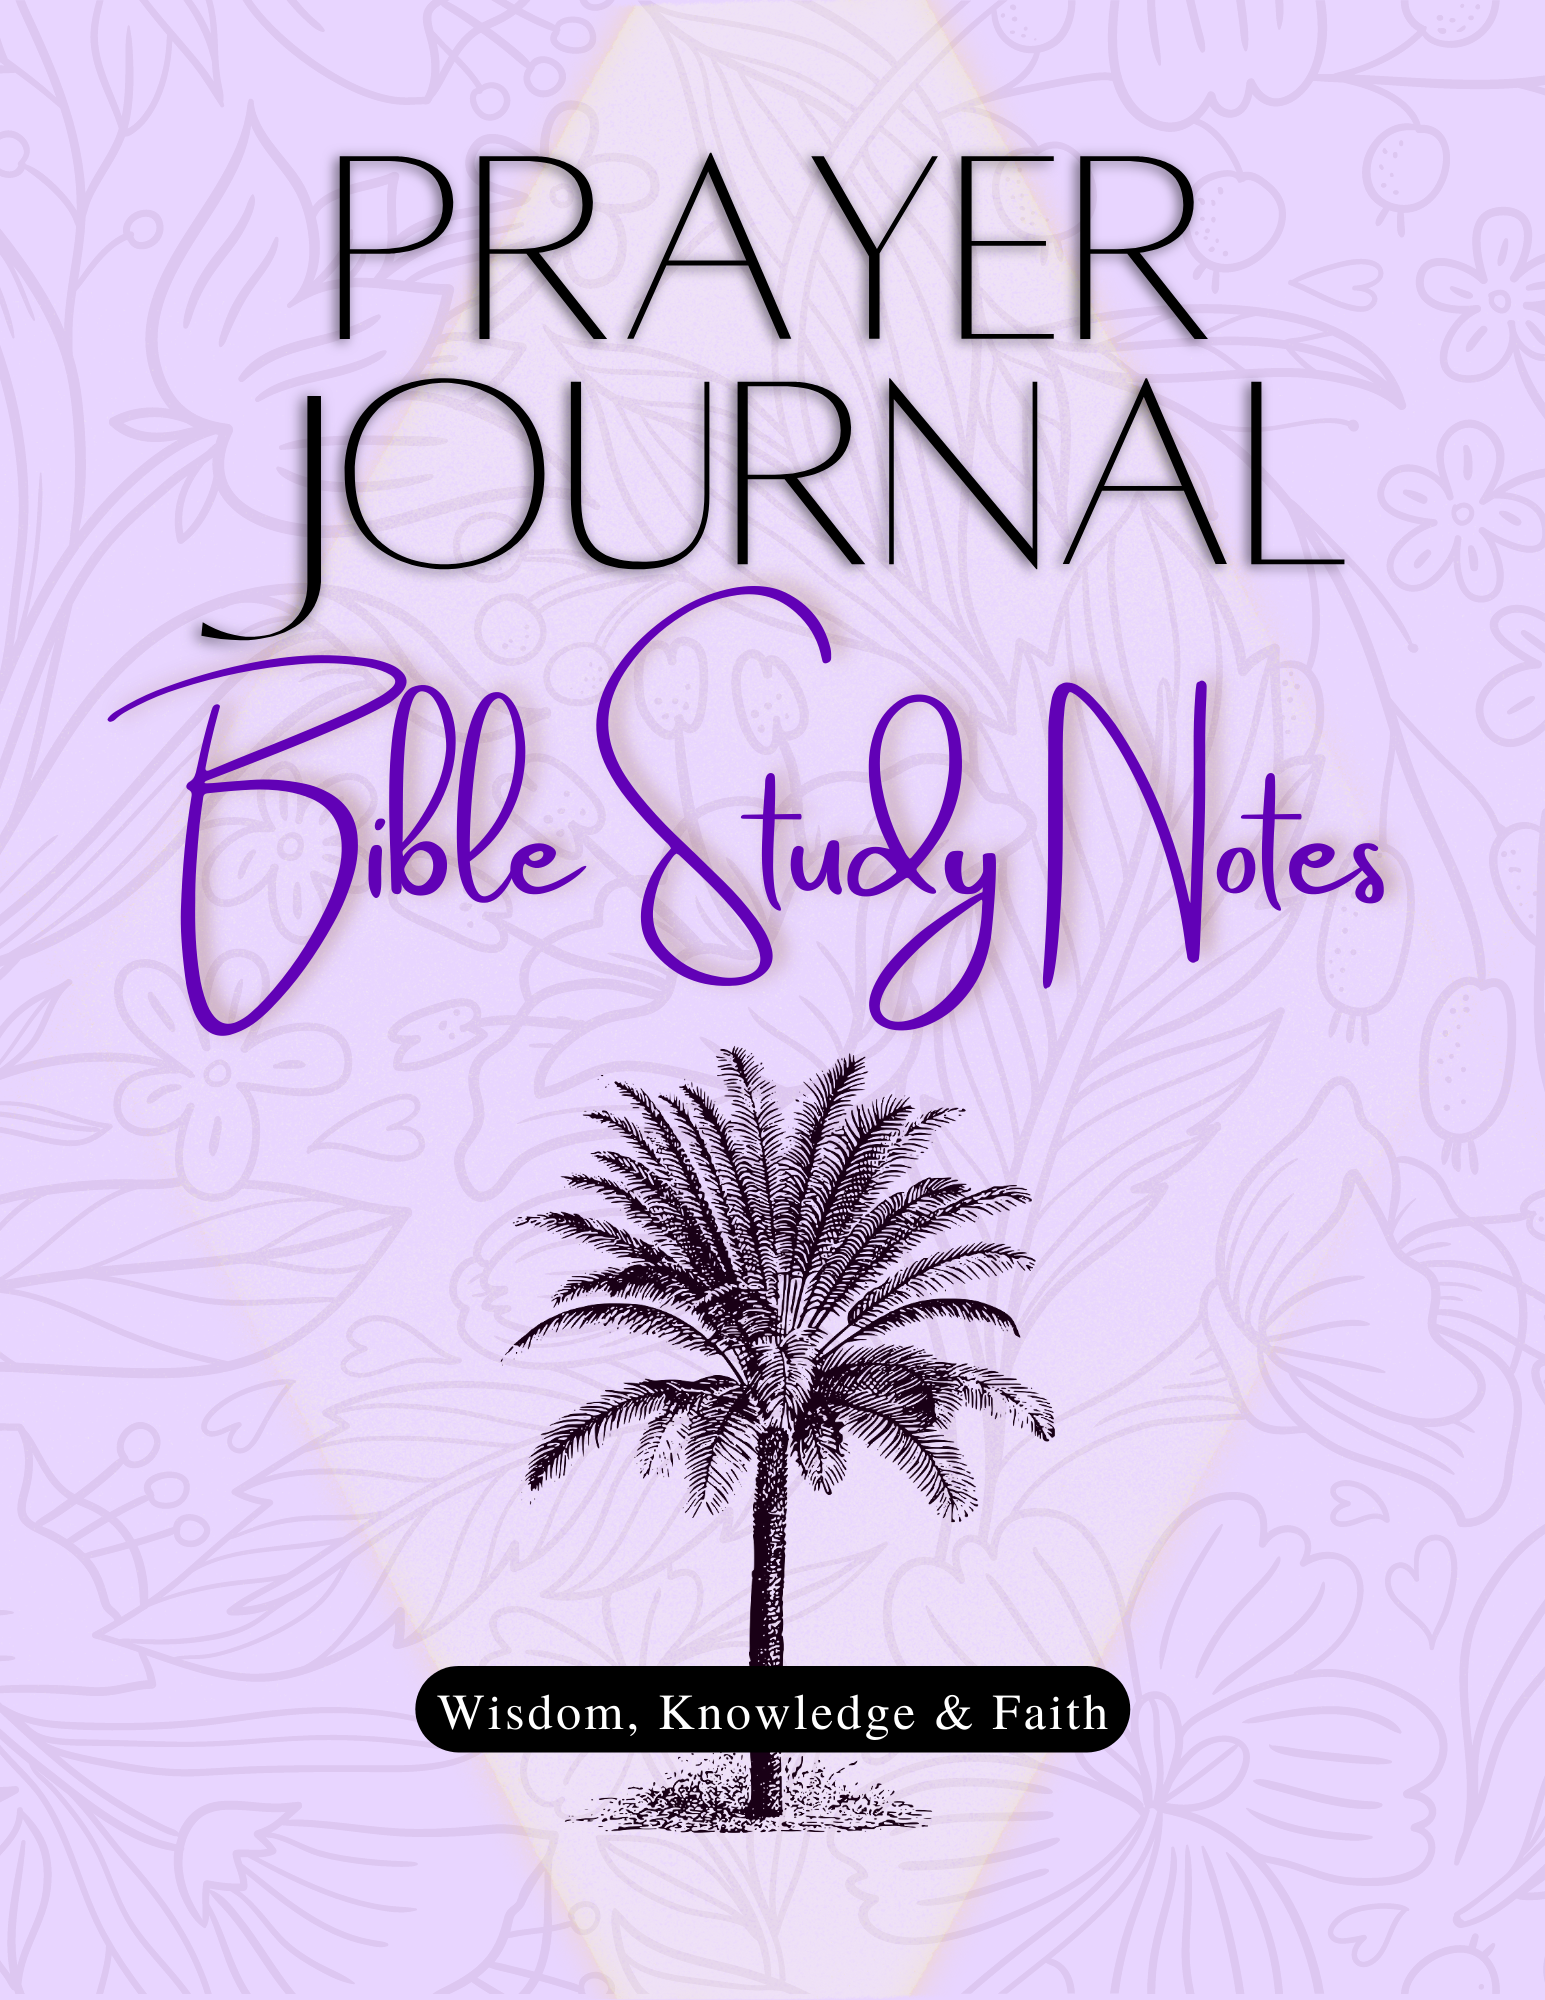 Prayer Journal Bible Study Notes: Wisdom, Knowledge & Faith